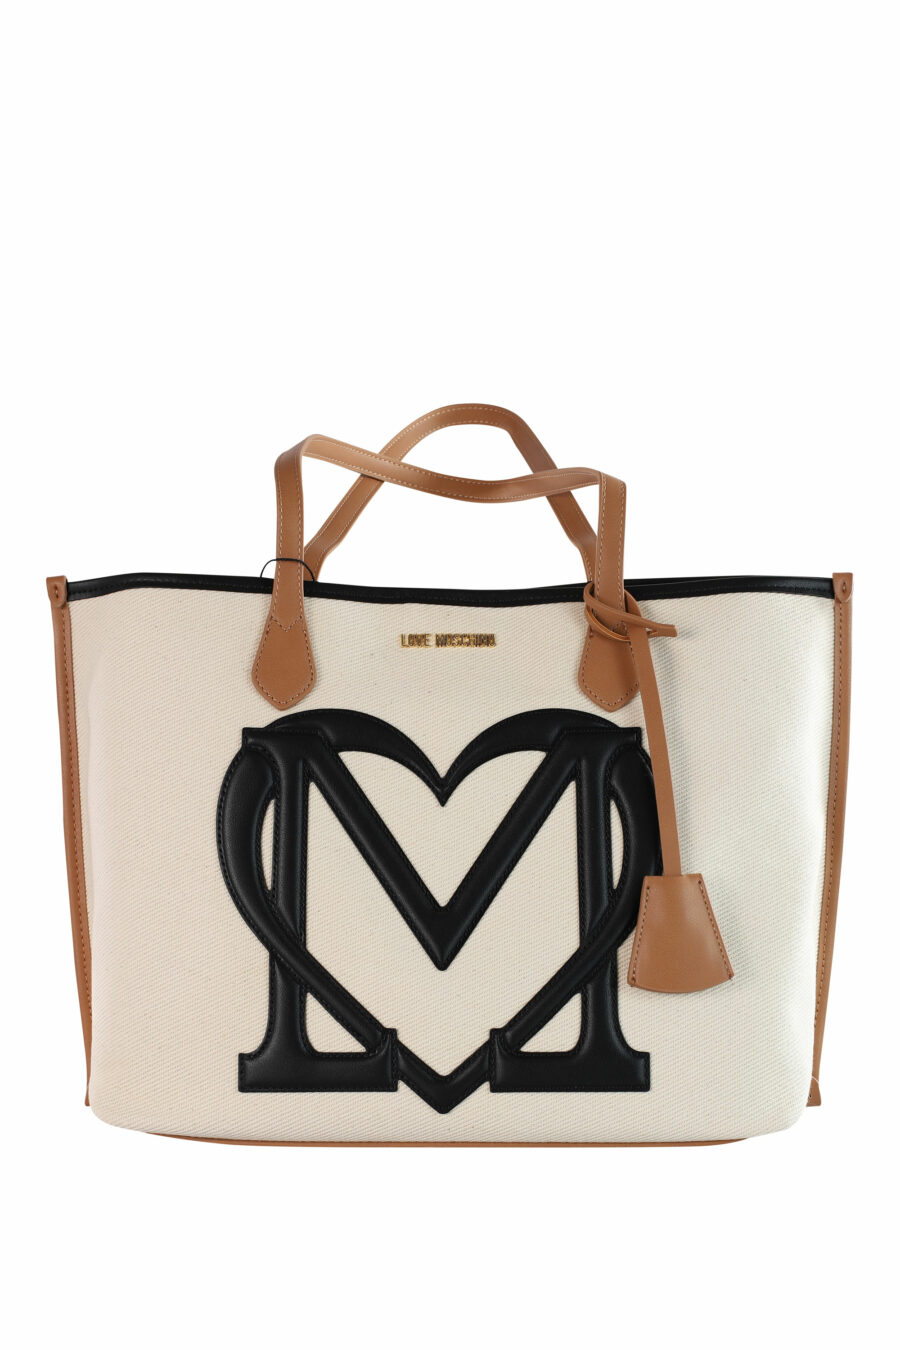 White shopper bag with black heart maxilogo - IMG 3674